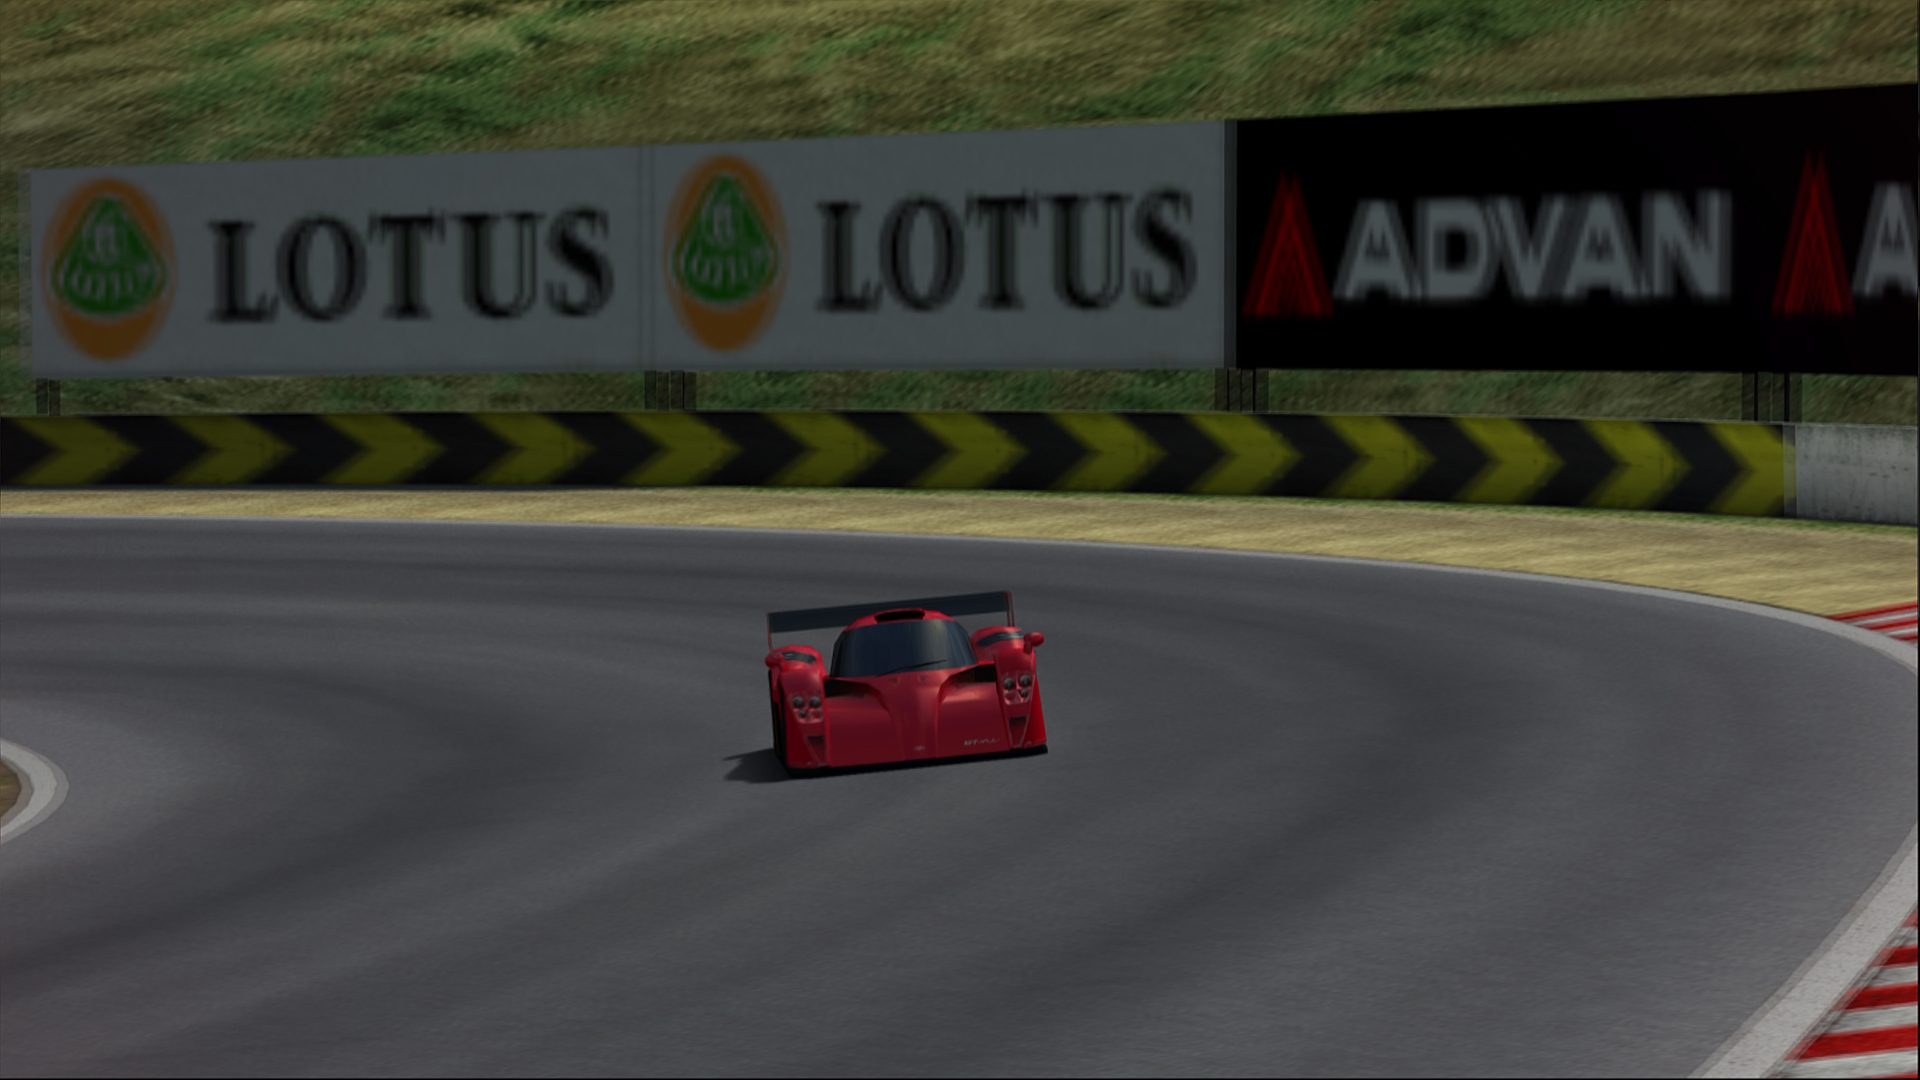 Gran Turismo 4 – Prologue PS2 (Used) – RetroGamingClub